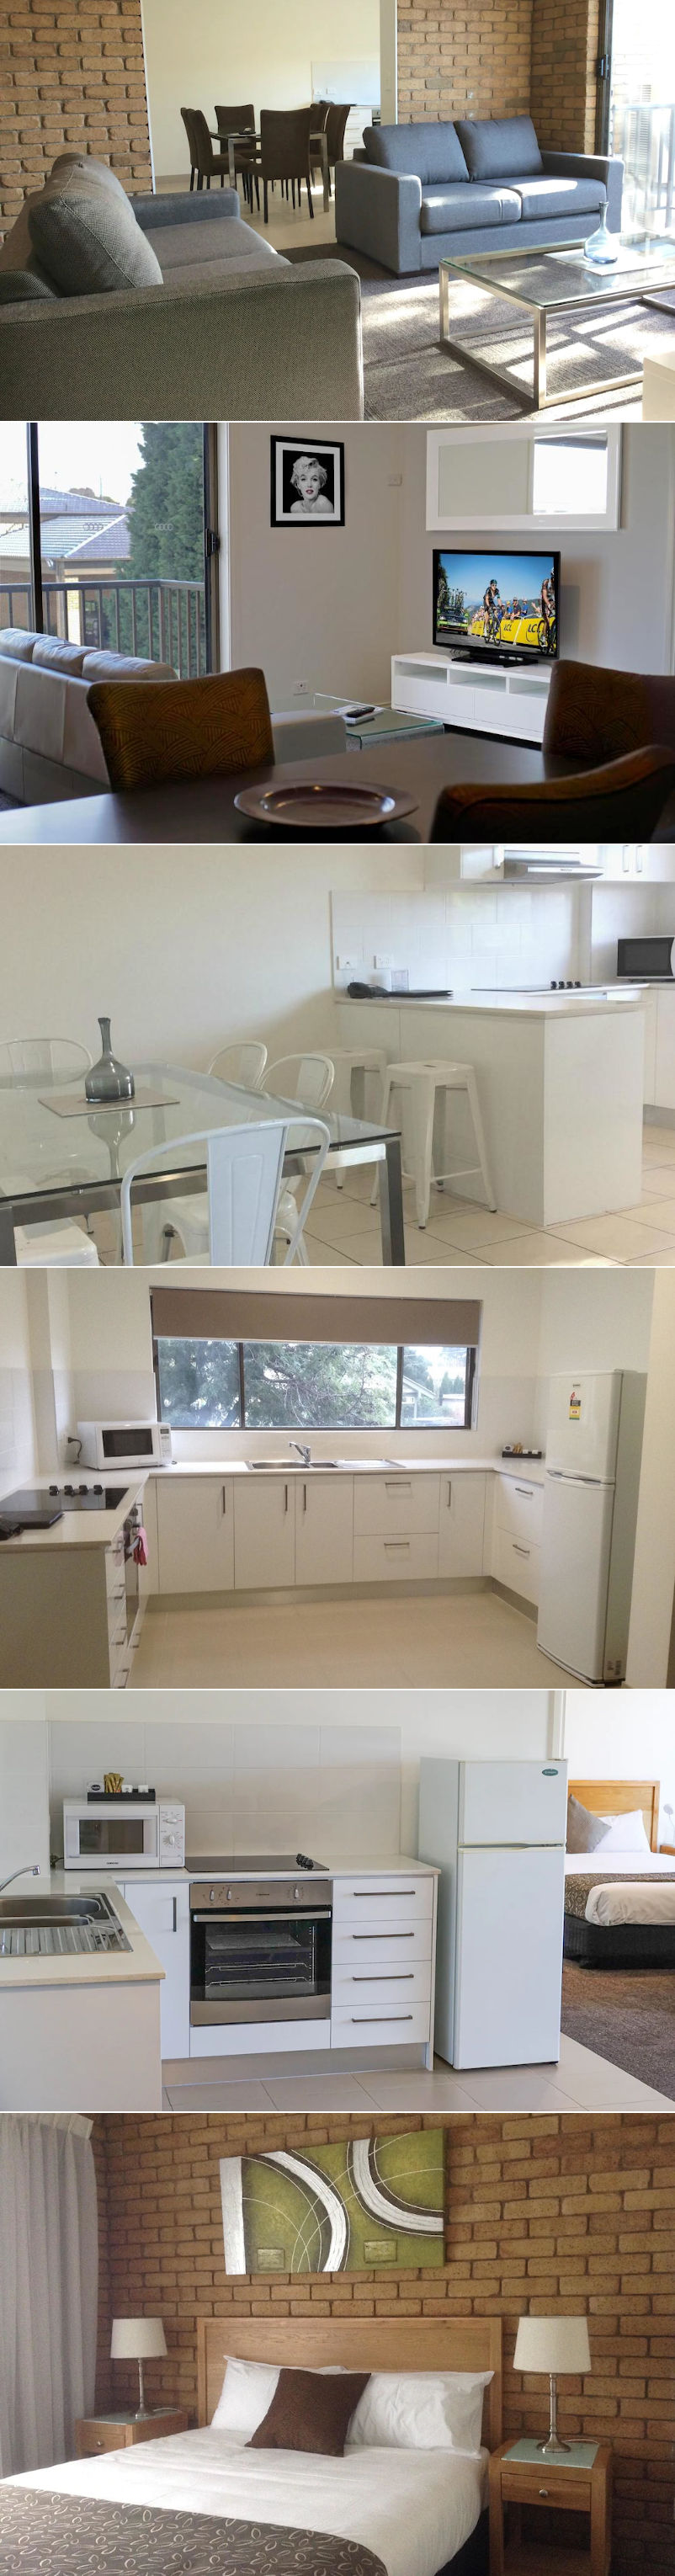 Geelong Motor Inn & Apartments - Apartments